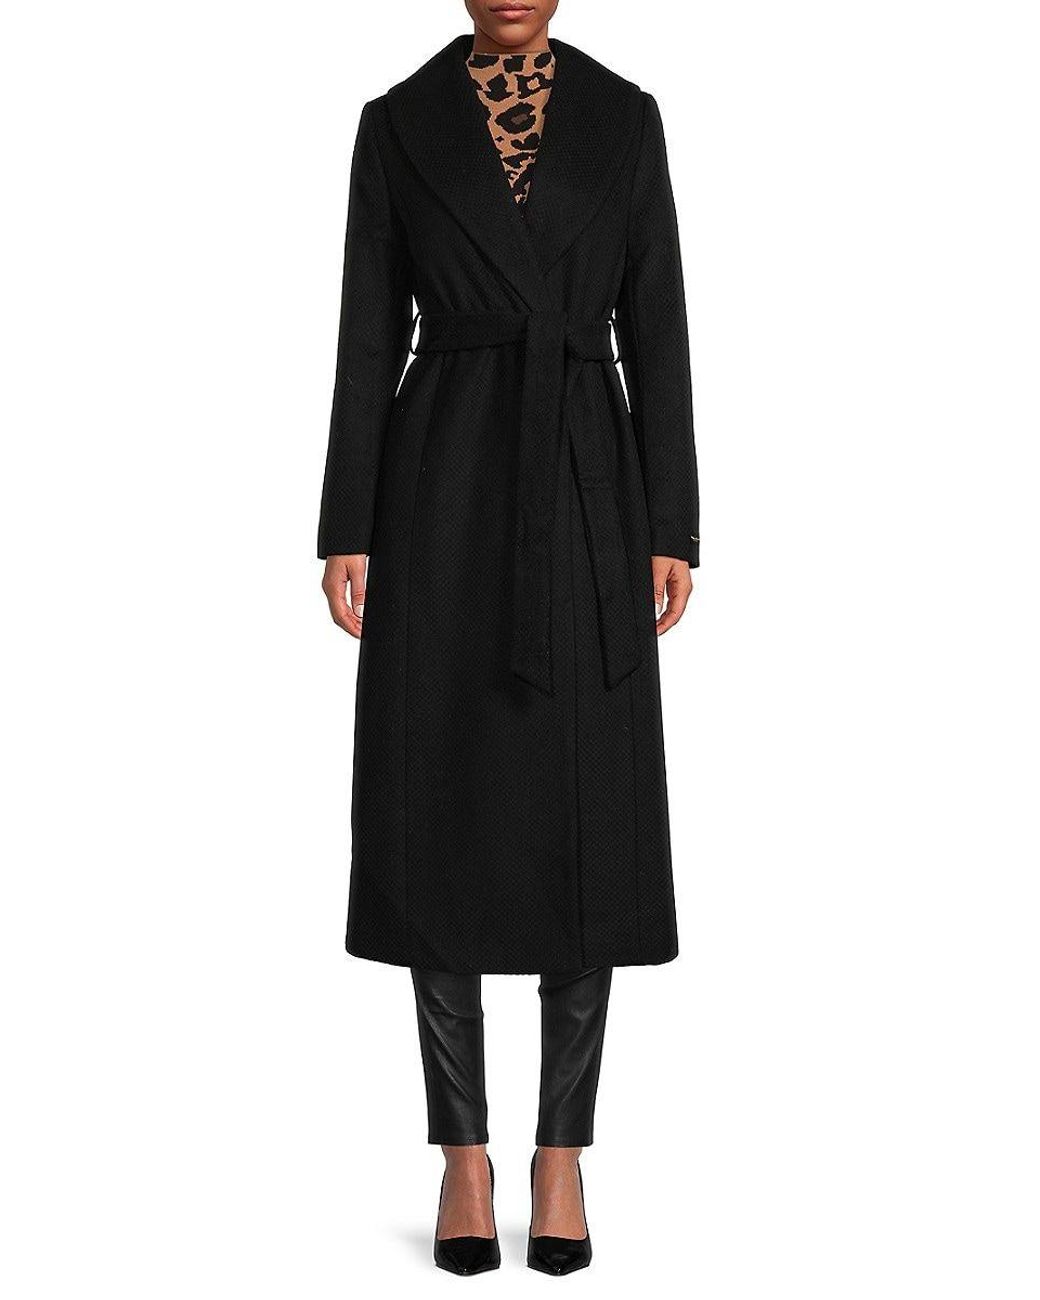 Donna Karan Textured Wool Blend Trench Coat in Black | Lyst